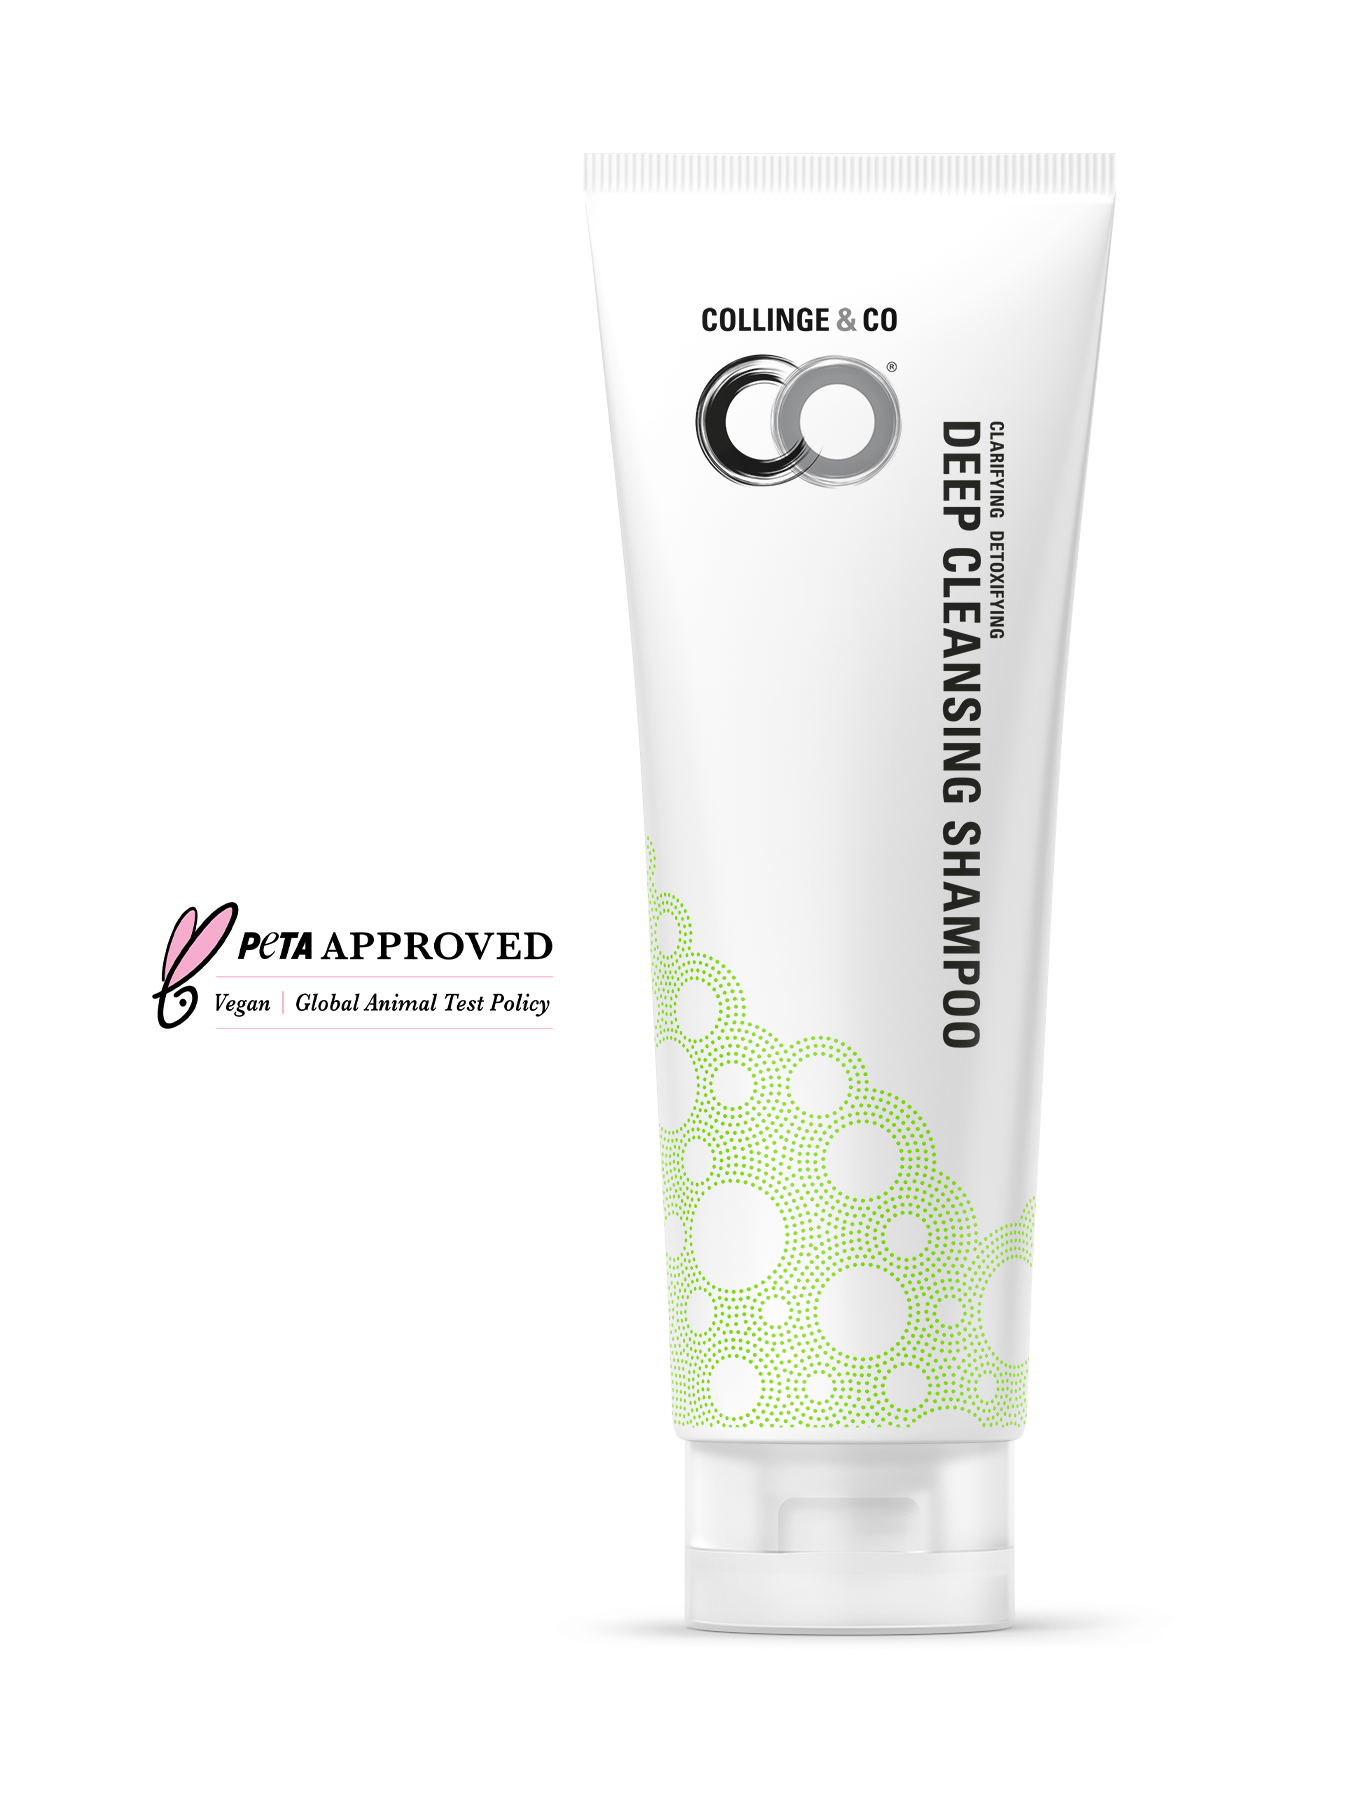 Collinge & Co Deep Shampoo PeTA accreditation